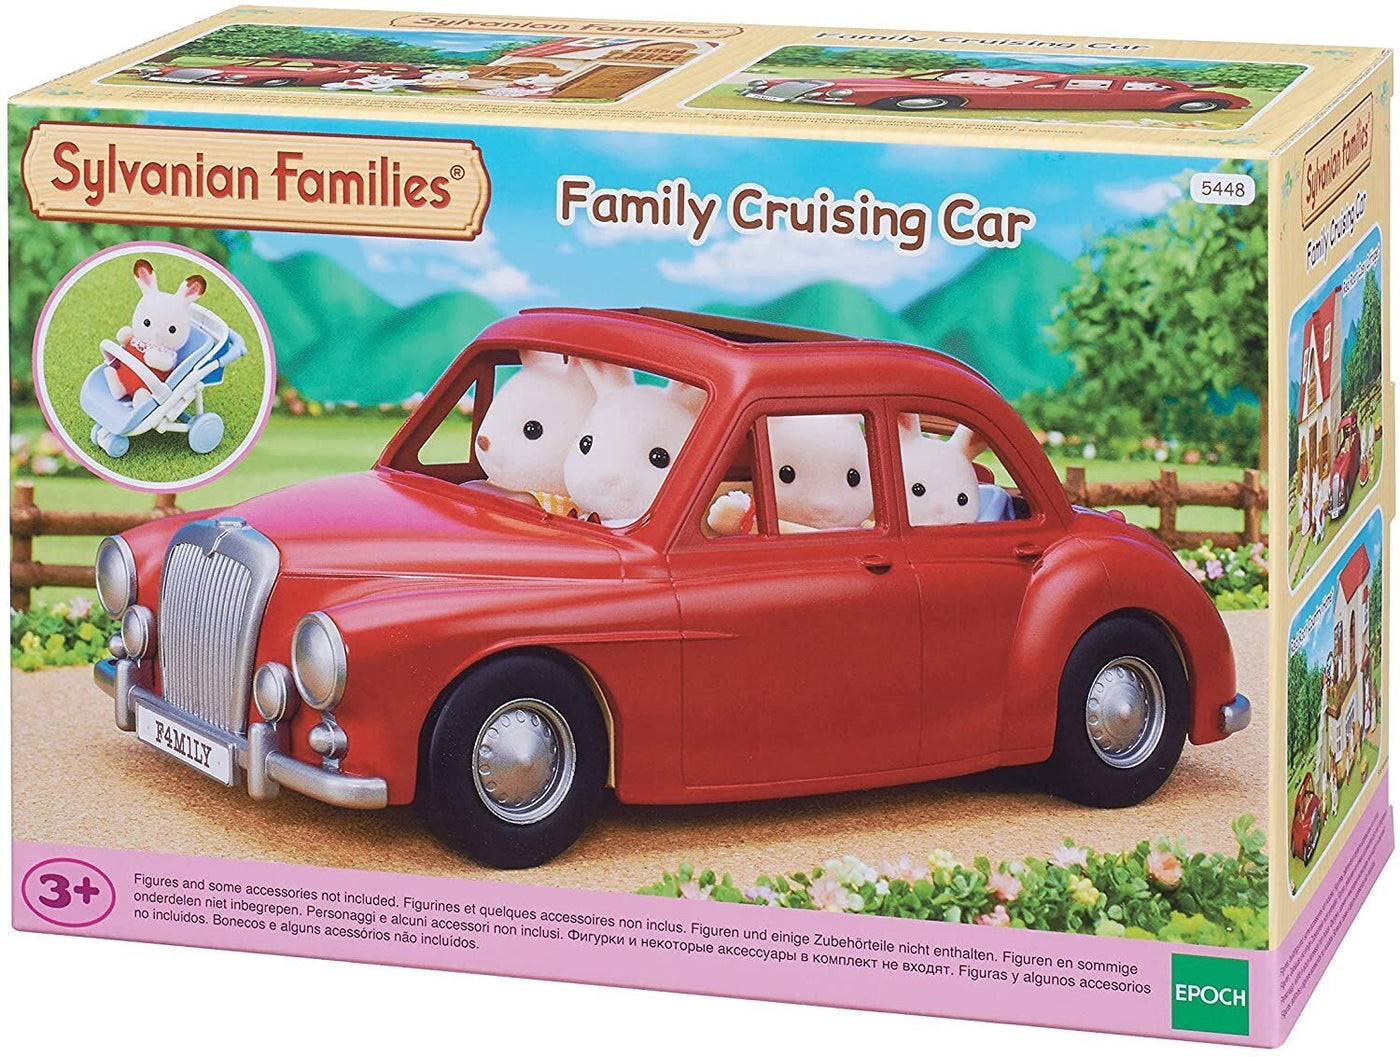 Sylvanian Families 5448 Cruising Car in box